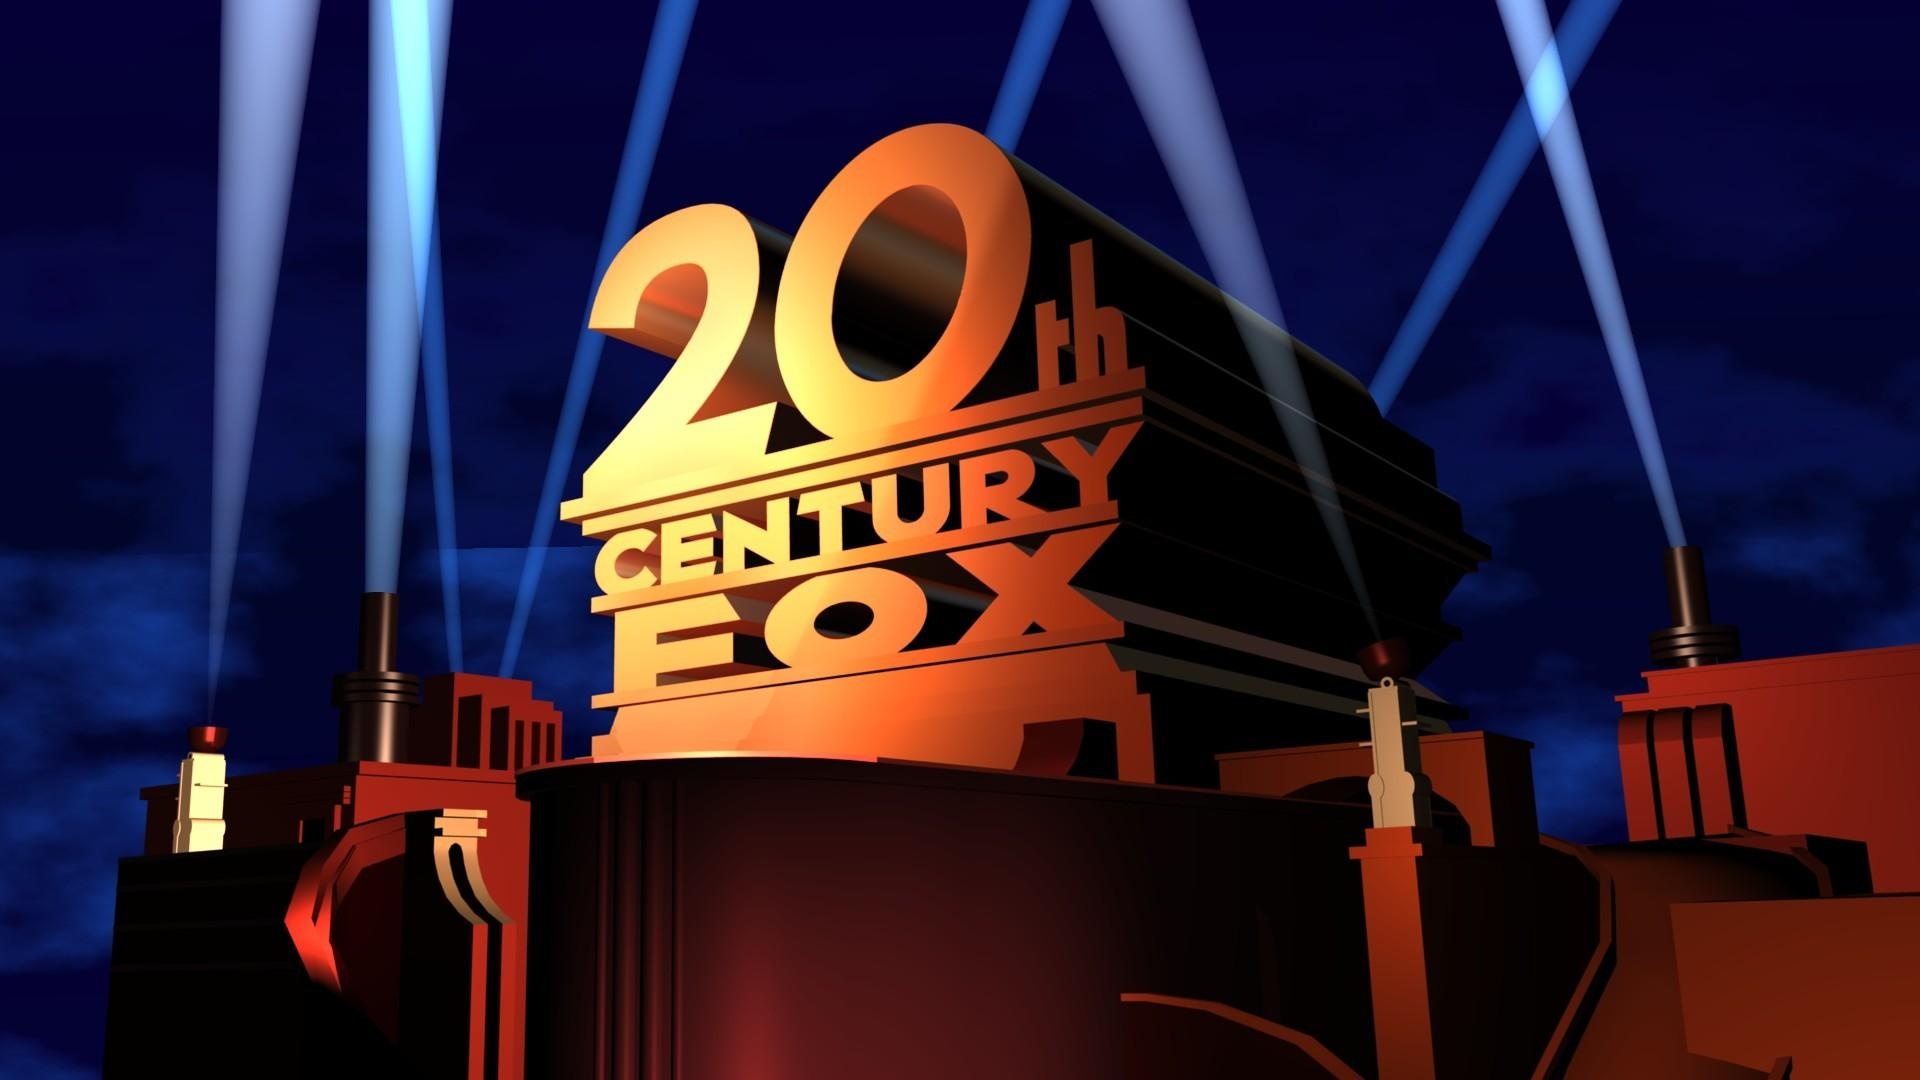 20 Век Центури Фокс. 20 Сенчури Фокс. Студия 20th Century Fox. 20th Century Fox СТС. Заставка fox